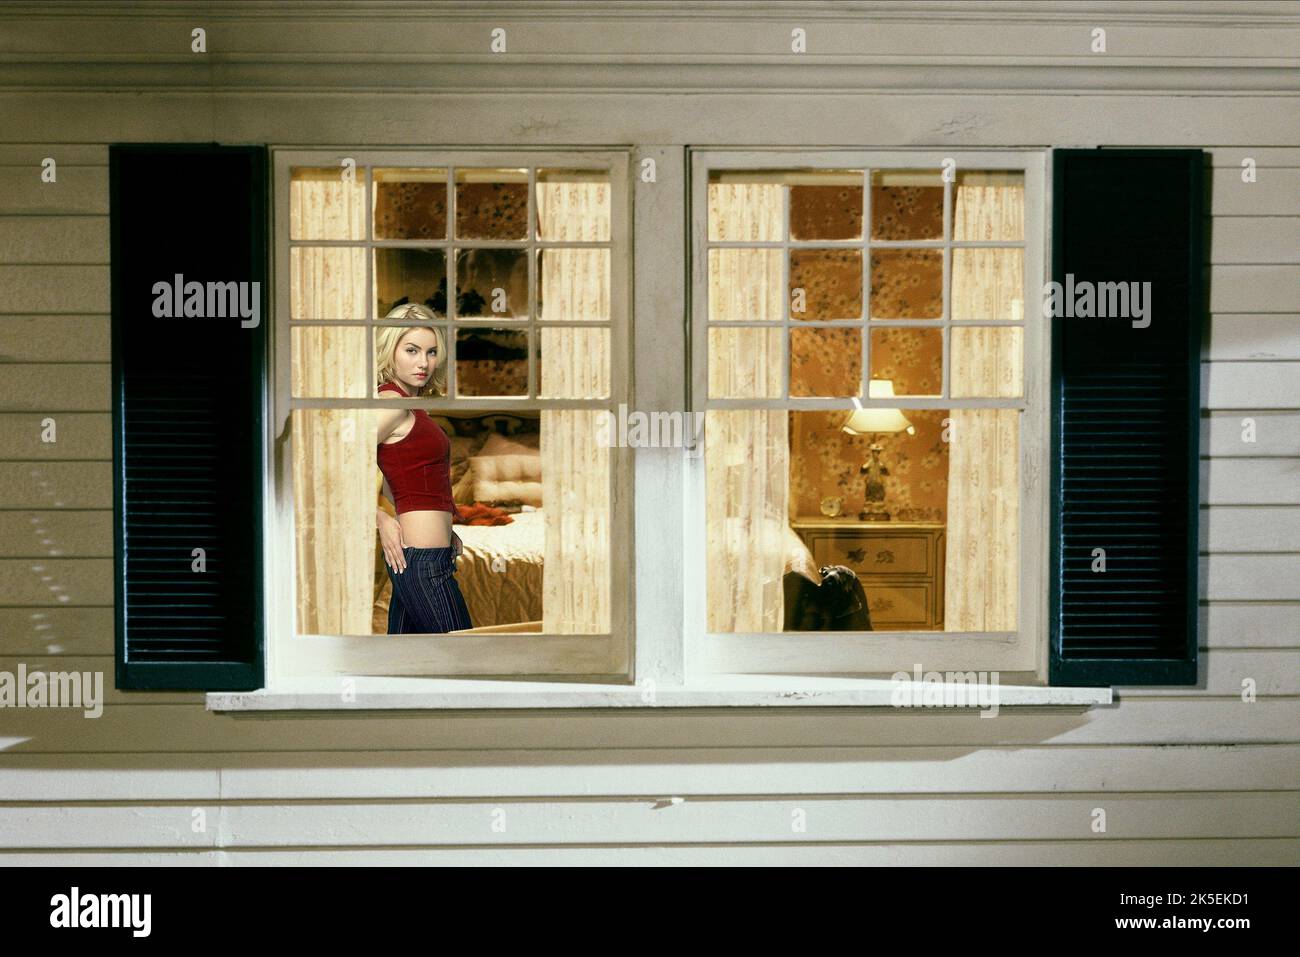 ELISHA CUTHBERT, THE GIRL NEXT DOOR, 2004 Stock Photo